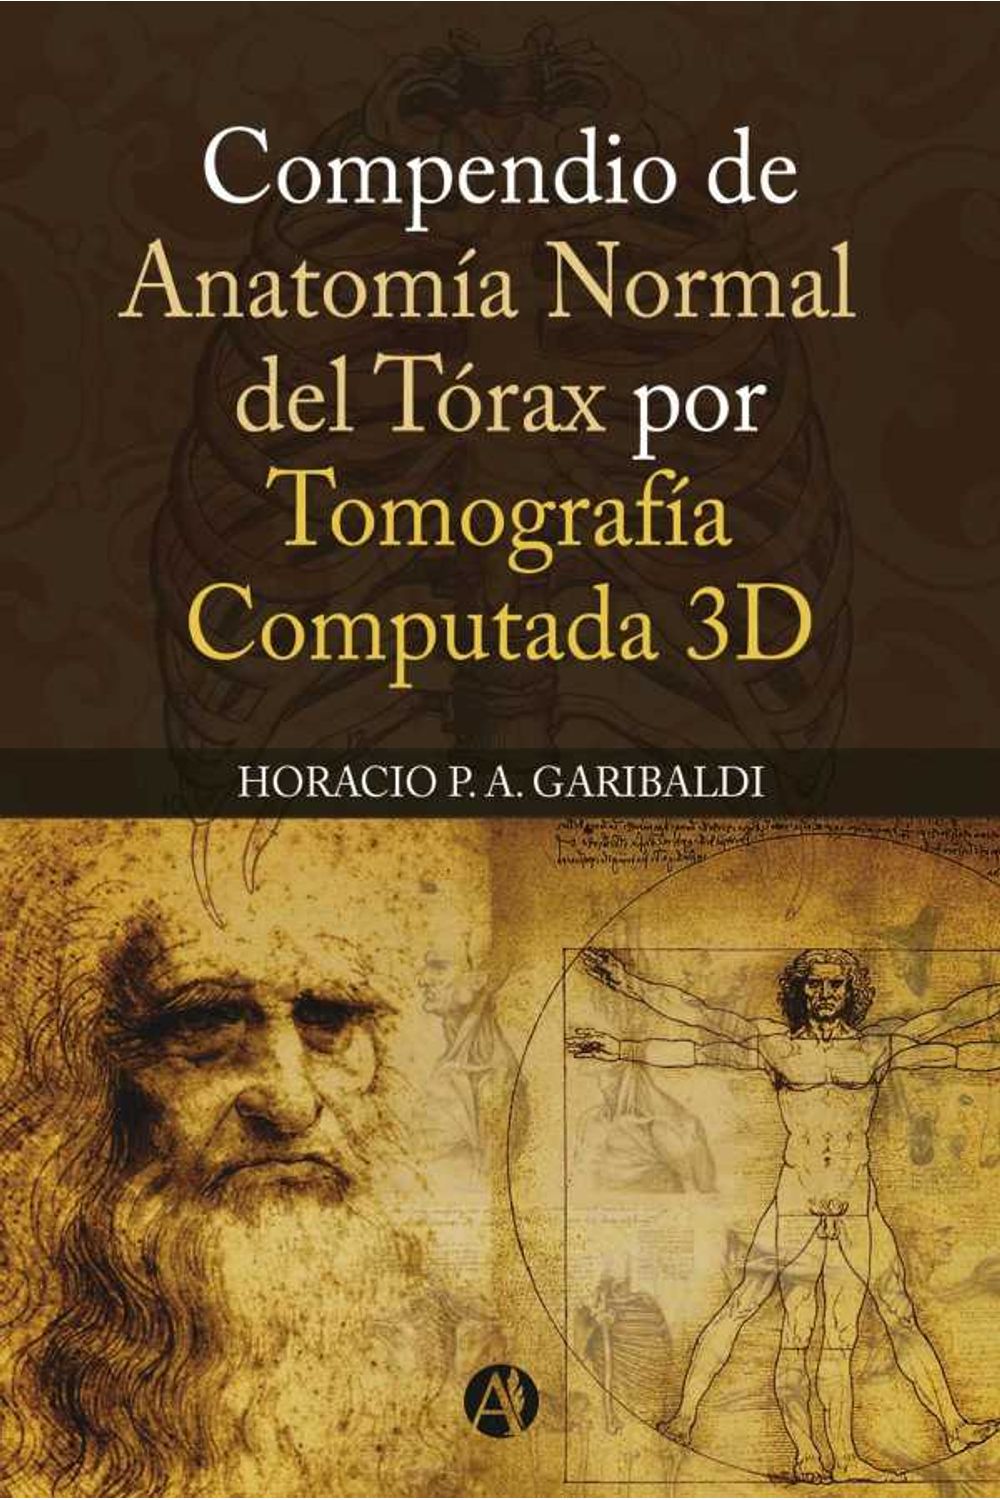 bw-compendio-de-anatomiacutea-normal-del-torax-por-tomografia-computada-3d-editorial-autores-de-argentina-9789878717548